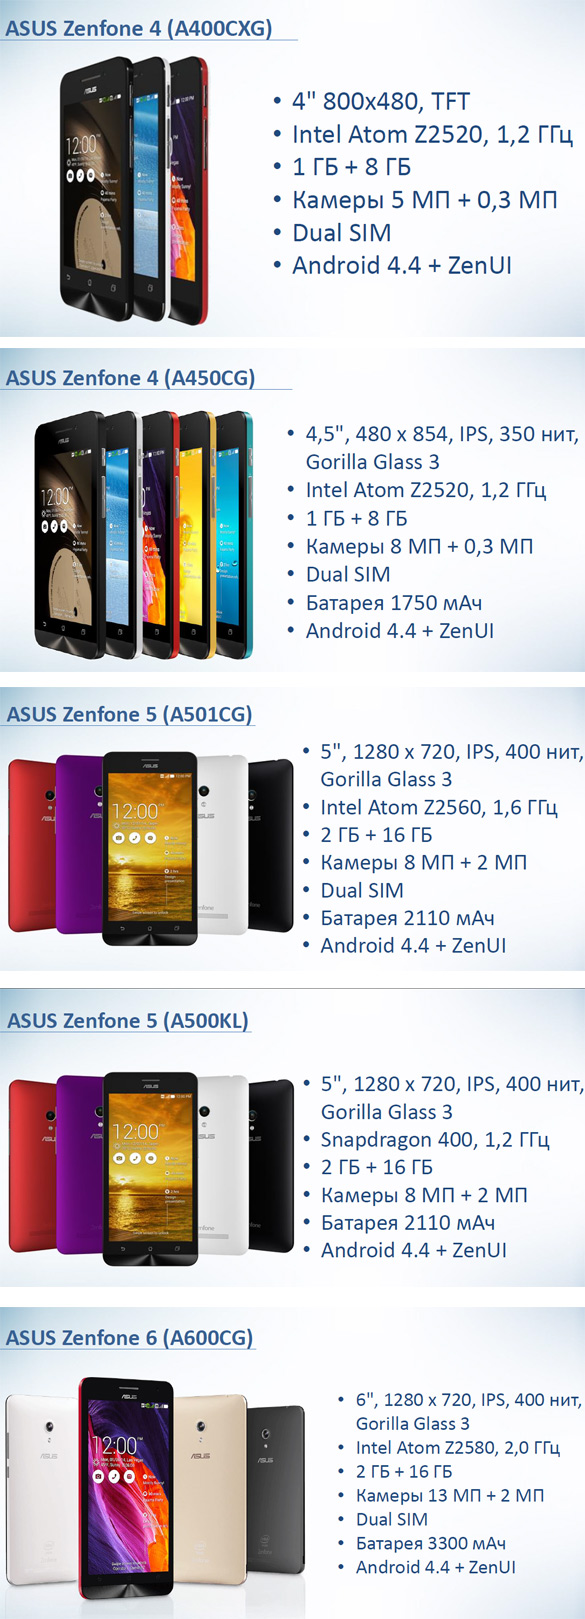 Характеристики ASUS Zenfone 4 (A400CXG), ASUS Zenfone 4 (A450CG), ASUS Zenfone 5 (A501CG), ASUS Zenfone 5 (A500KL), ASUS Zenfone 6 (A600CG)